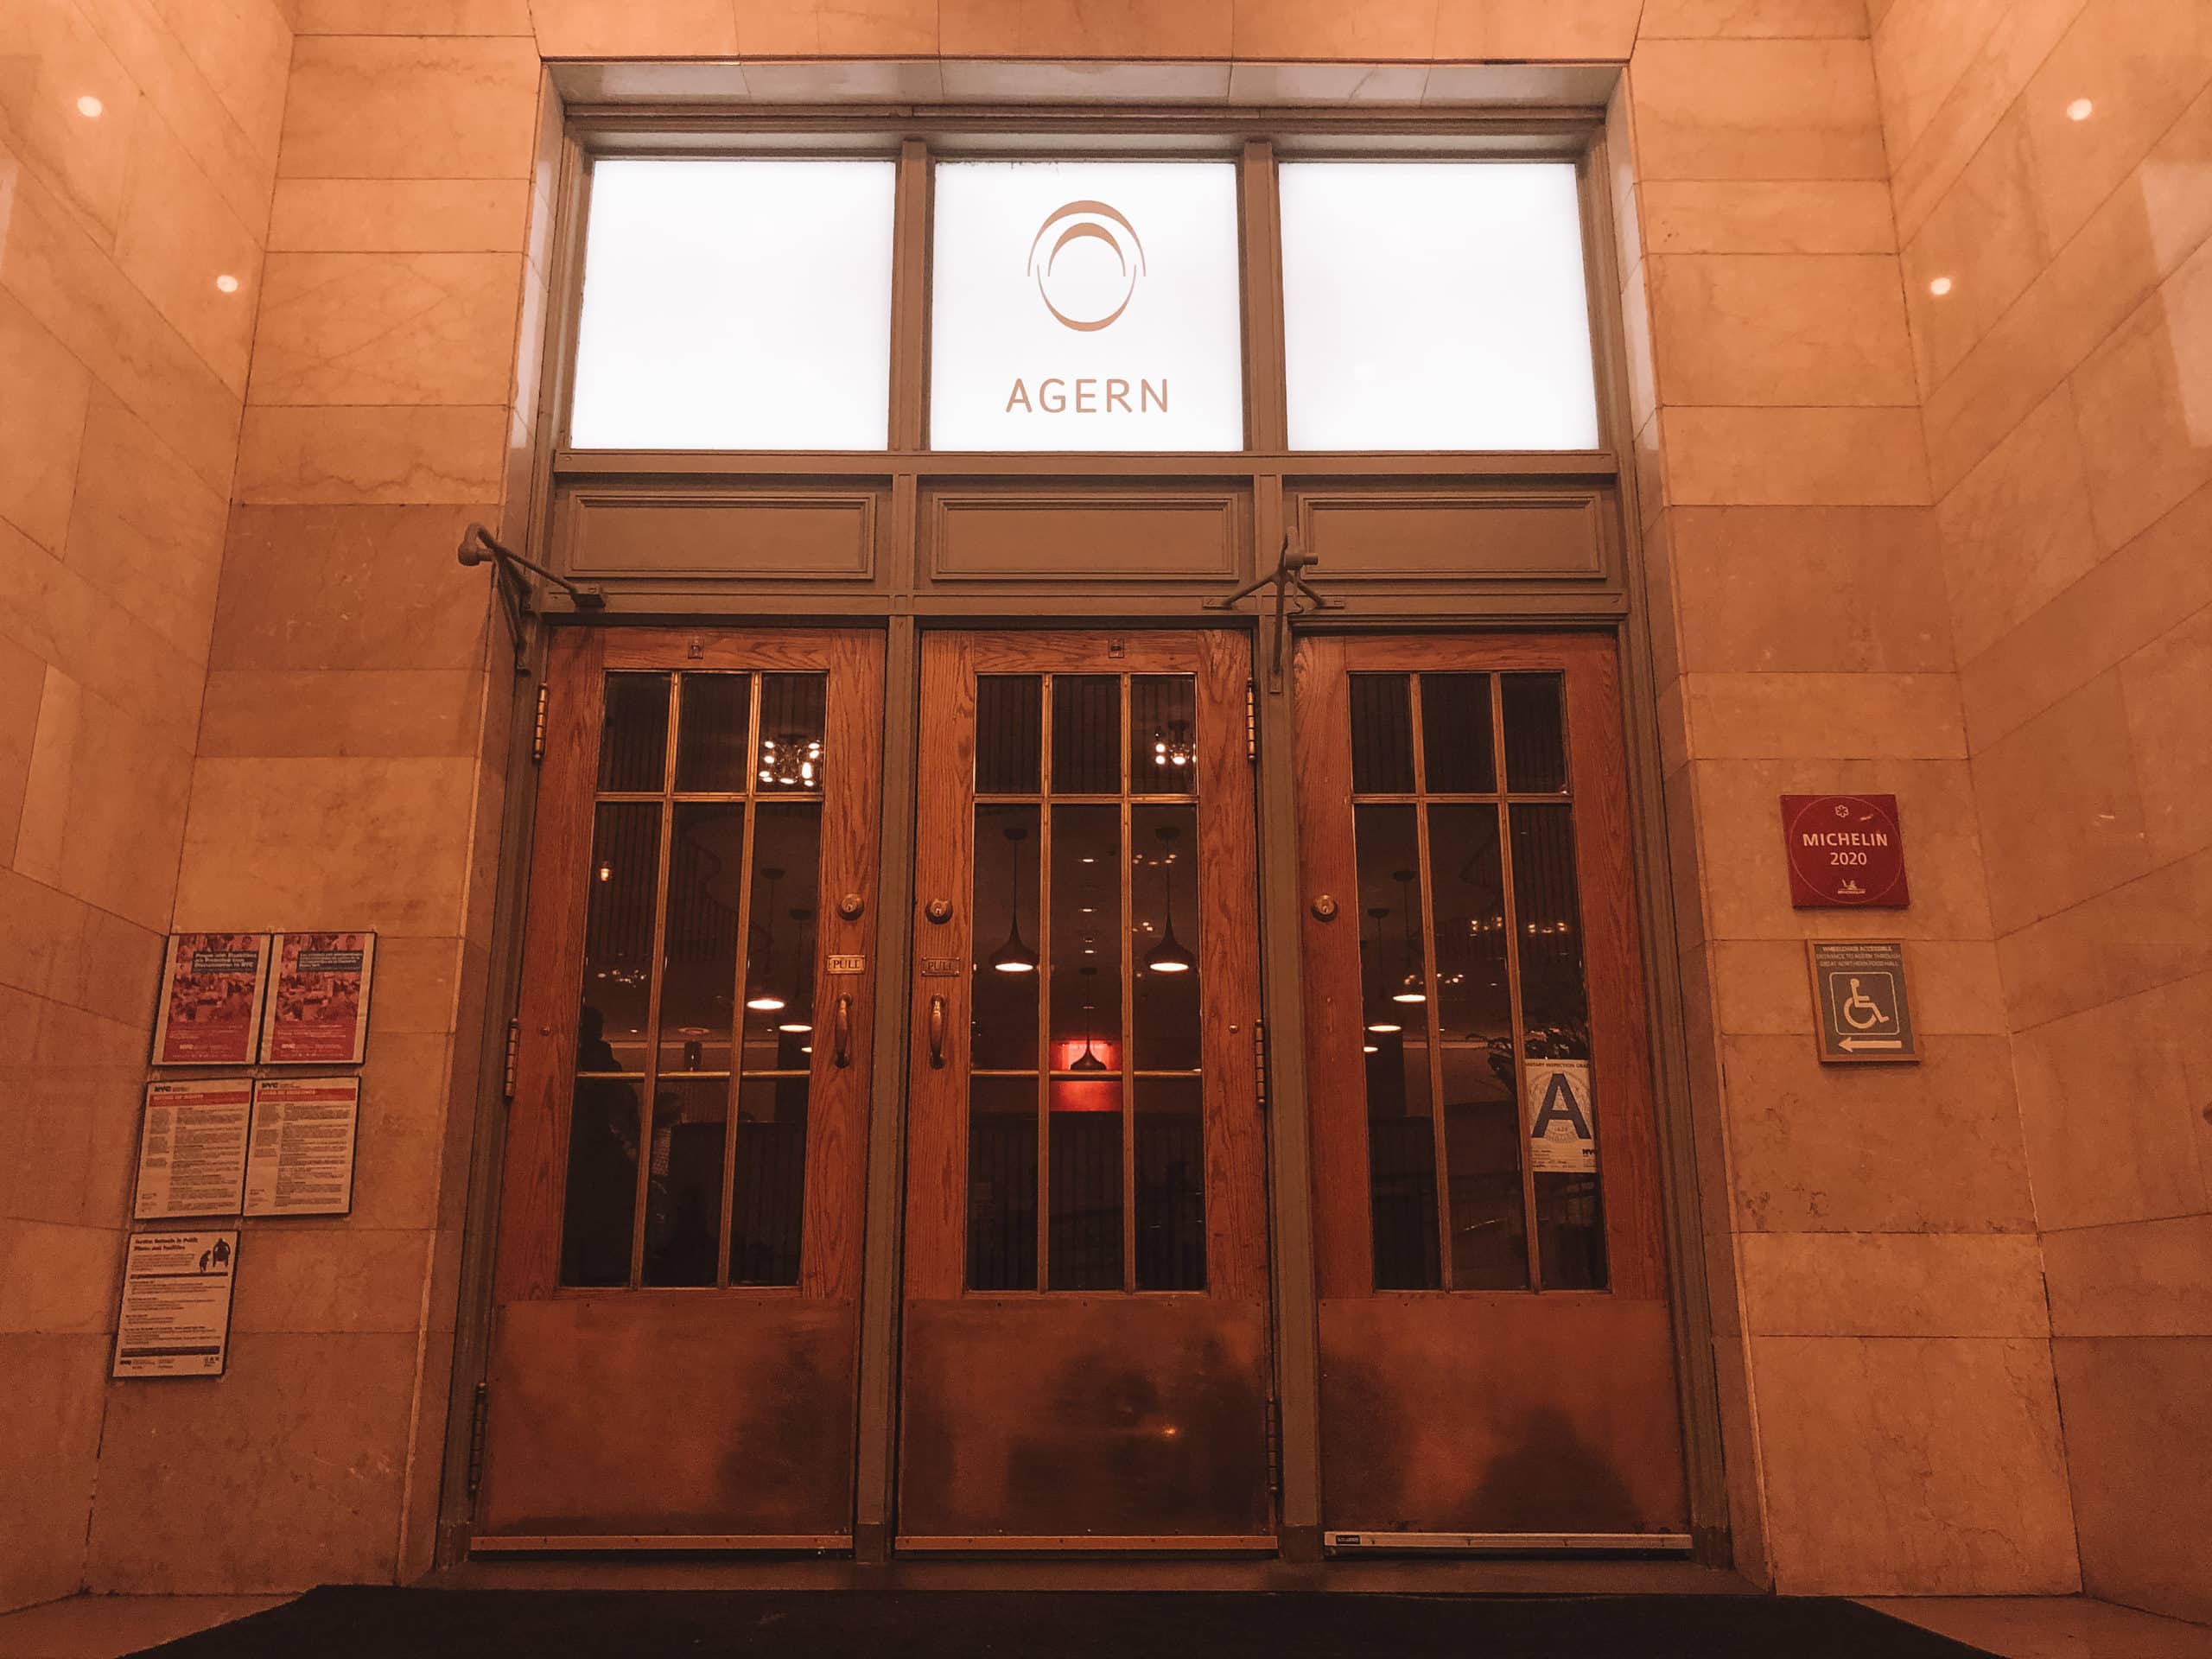 Agern мишлен рестораны, нью-йорк